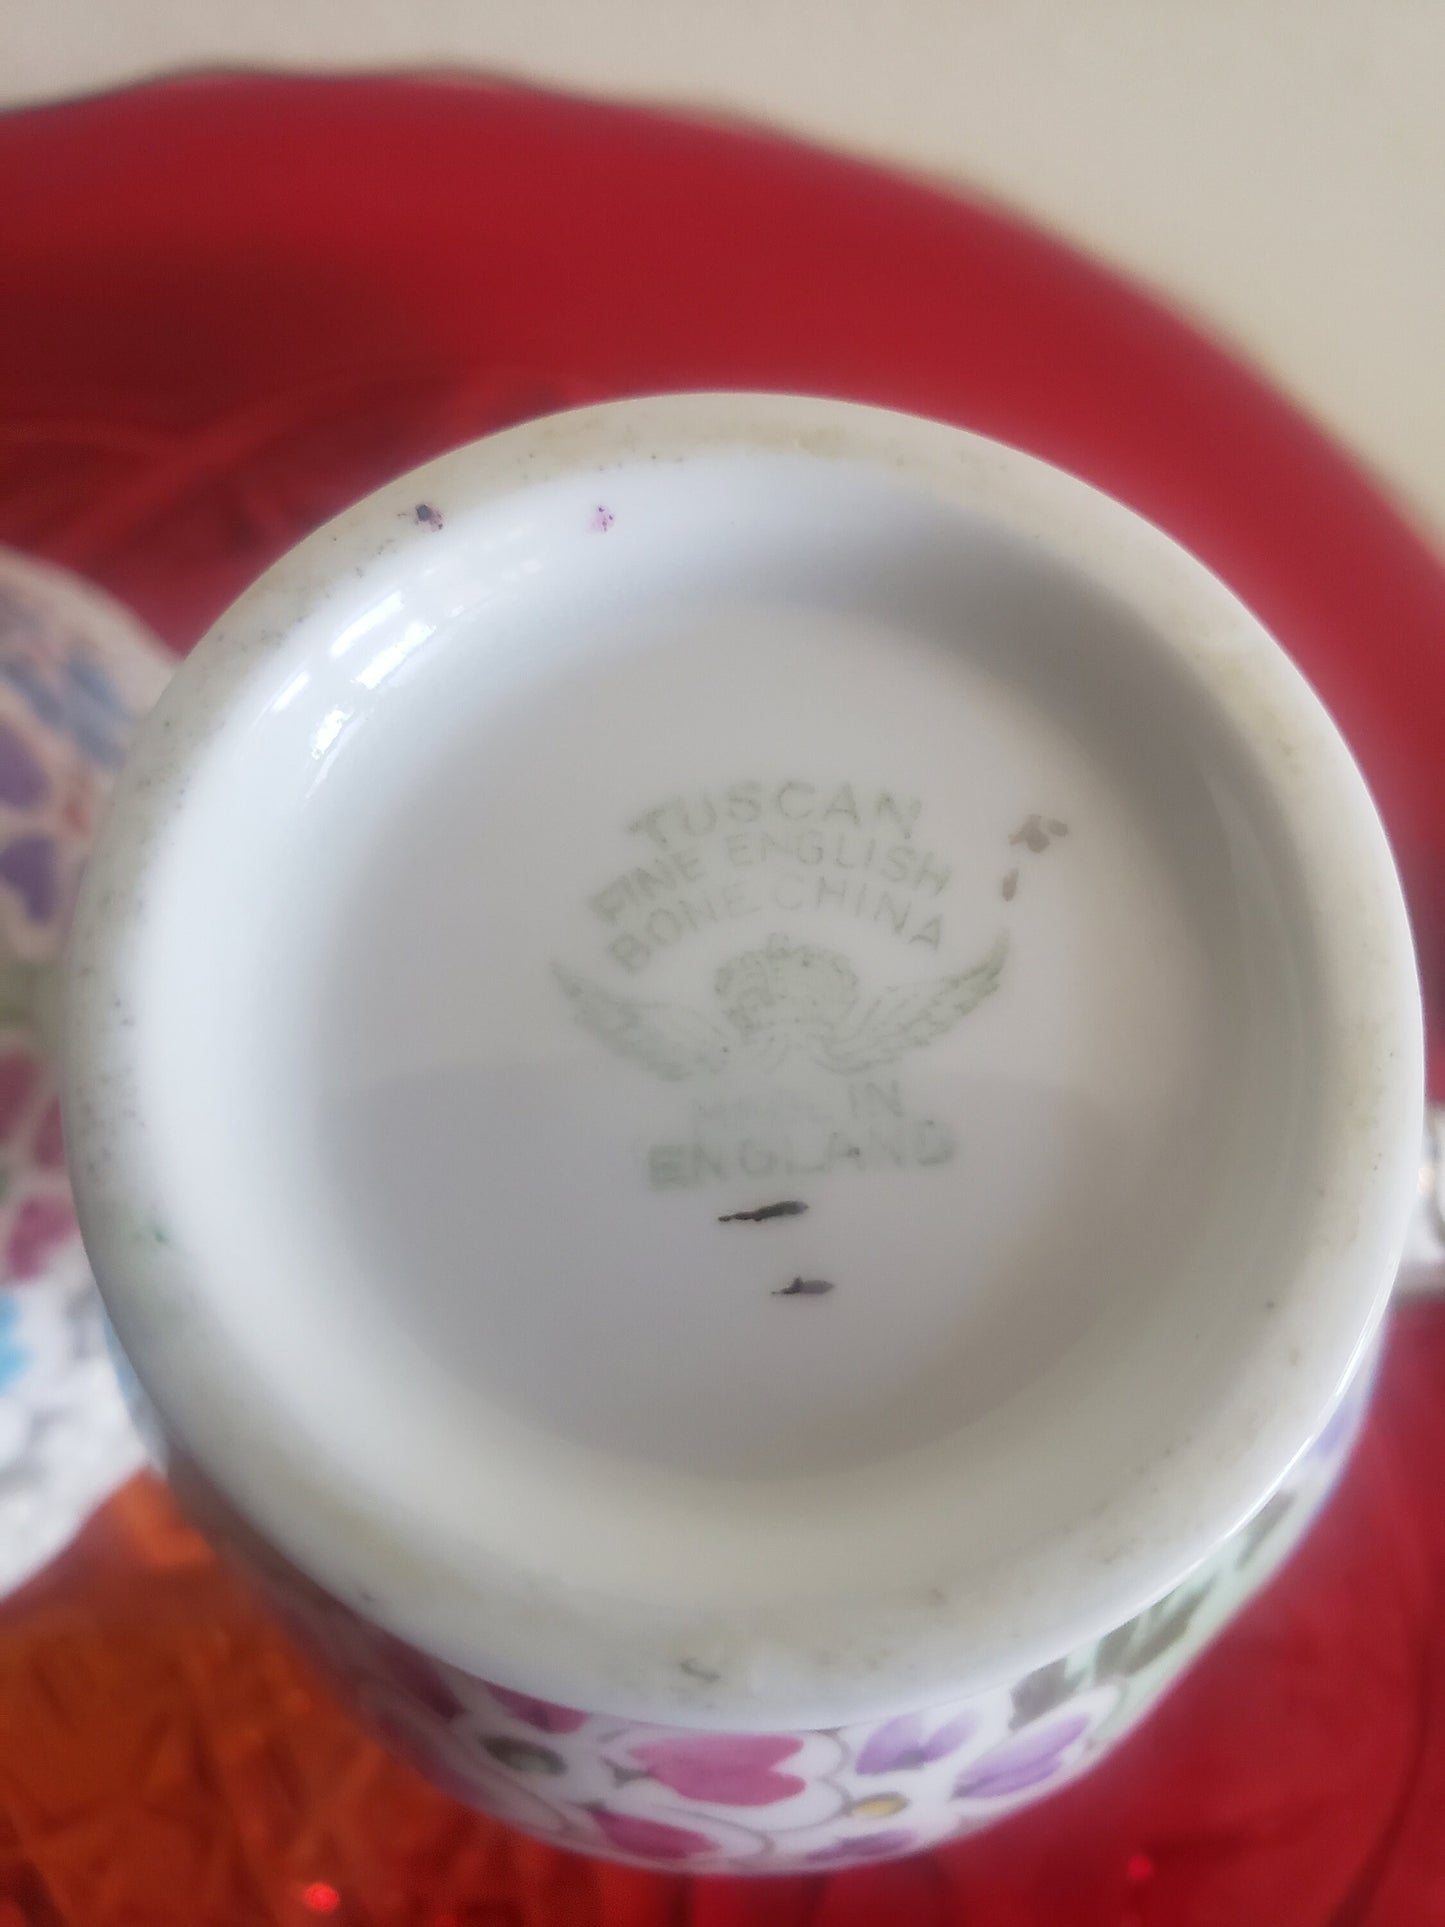 Vintage Tuscan Fine Bone China Sugar Bowl and Creamer Set